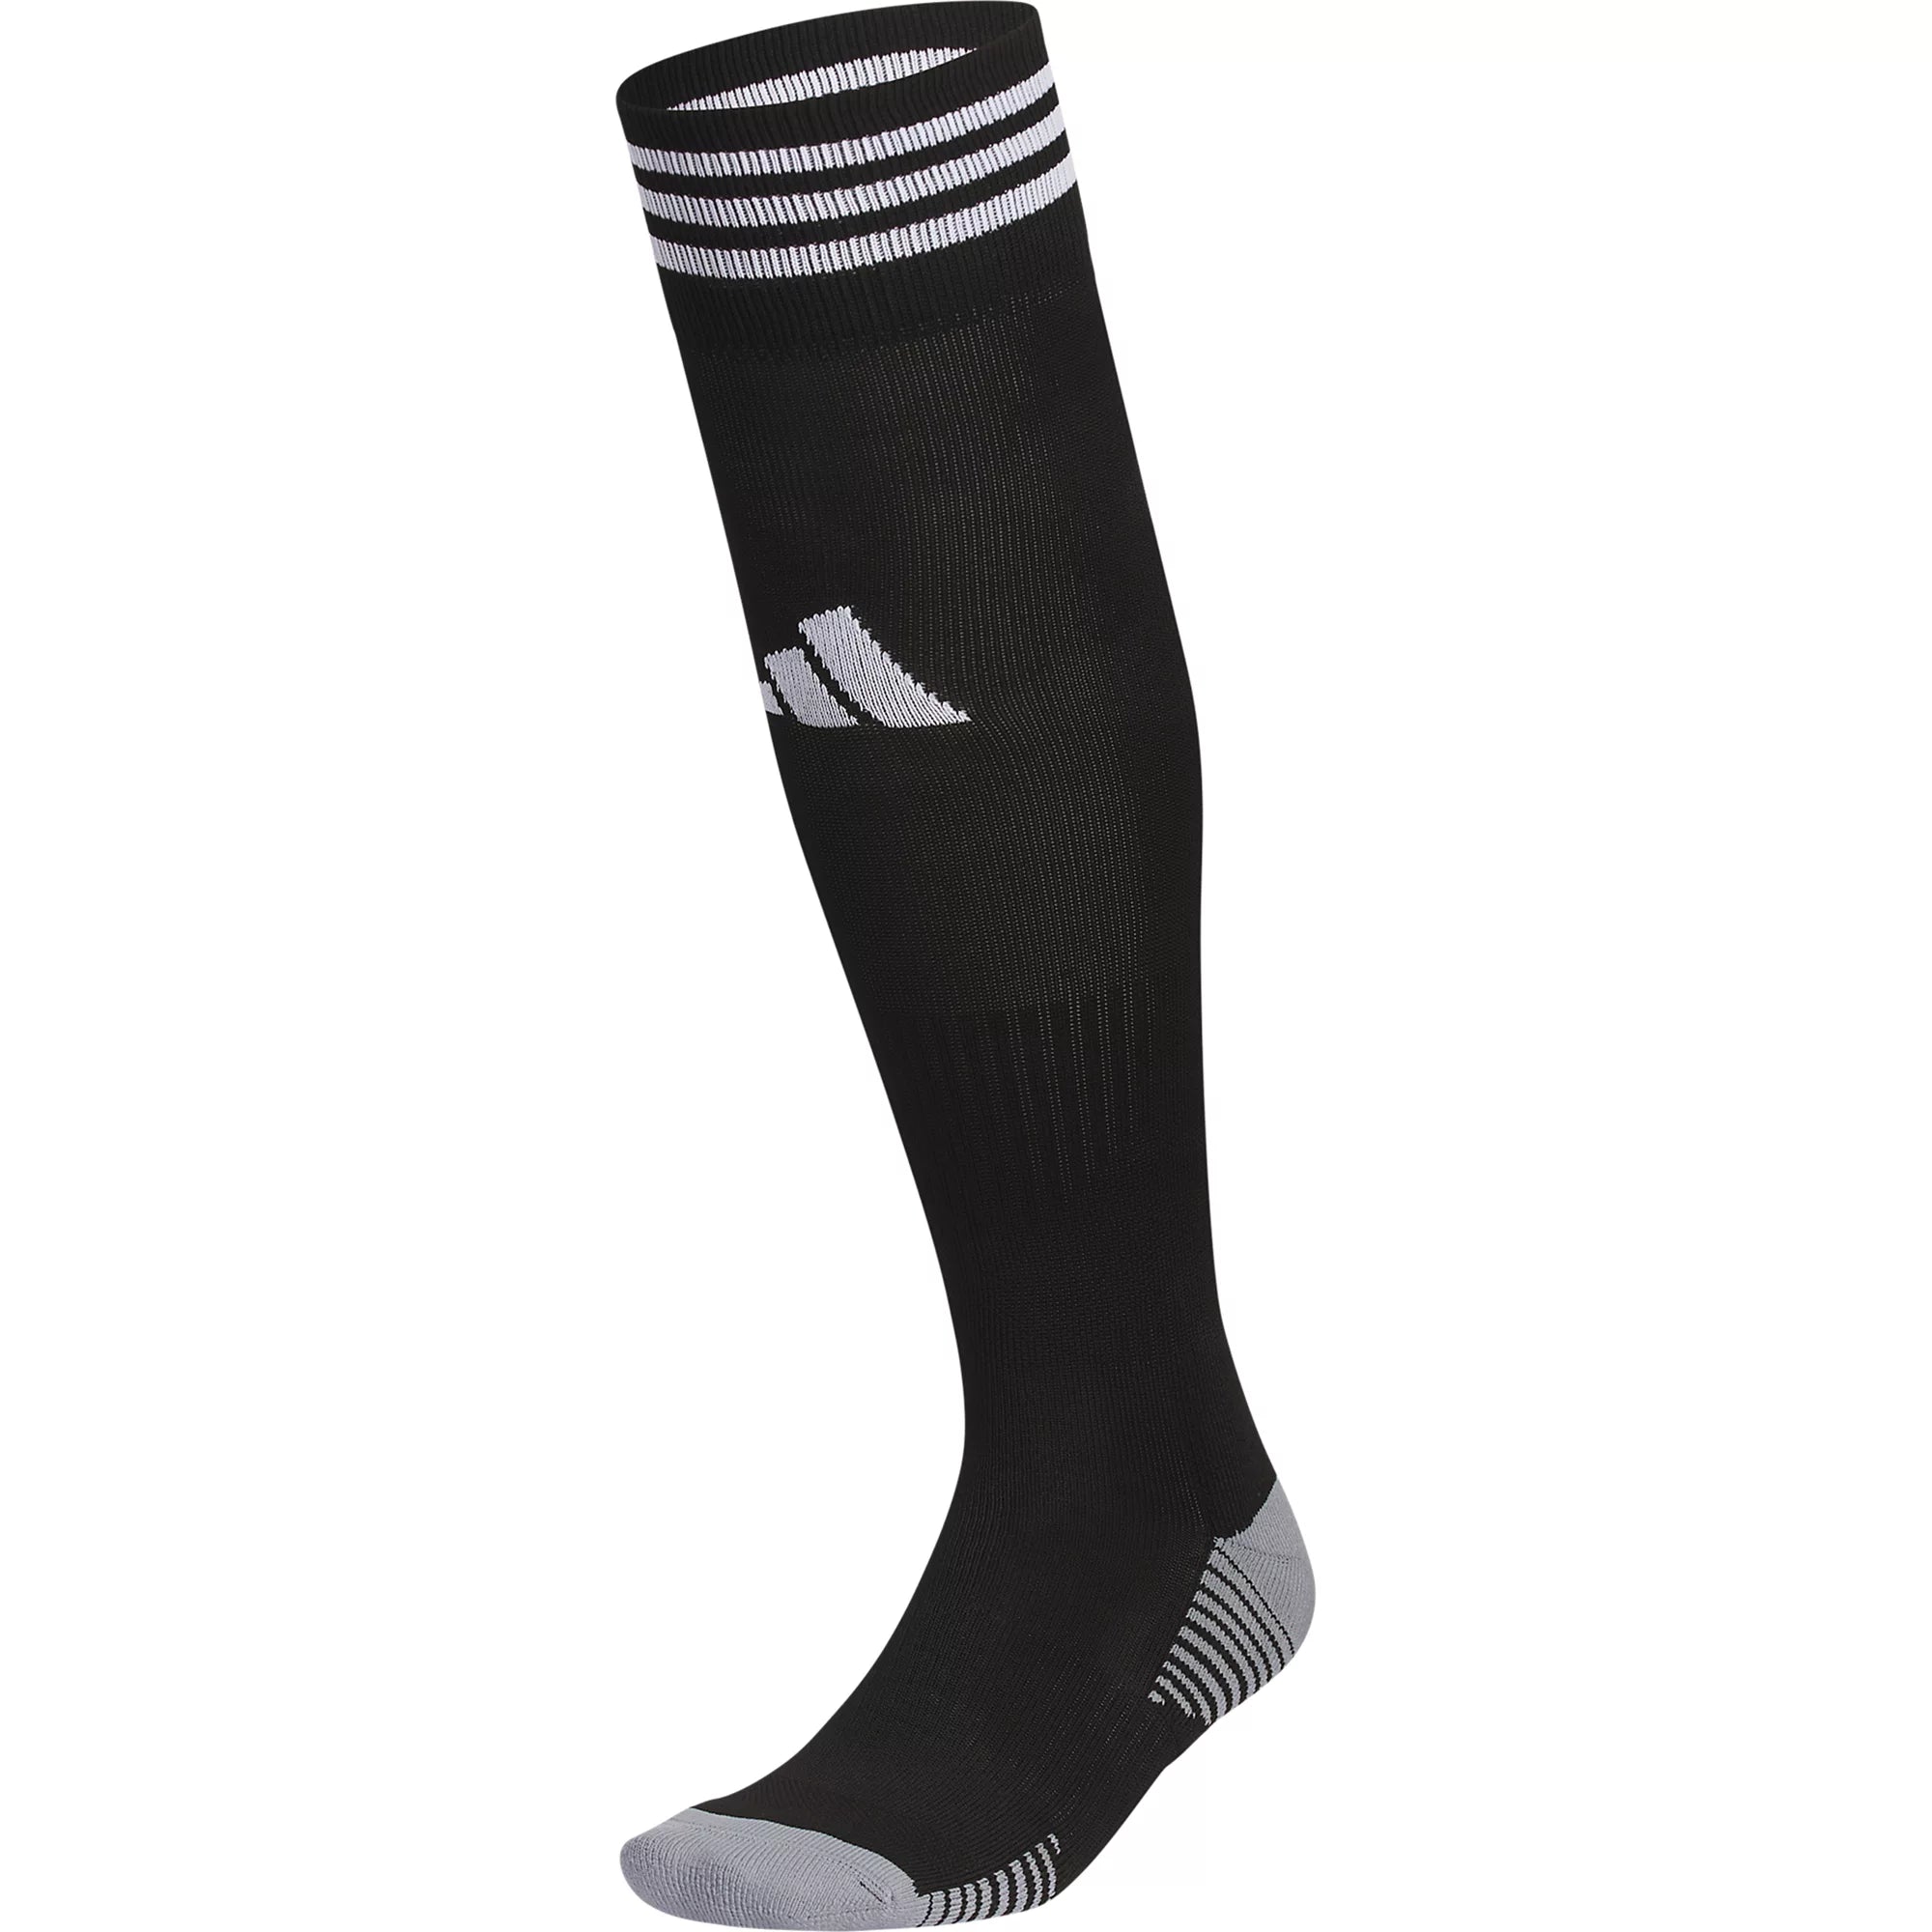 Adidas Copa Zone Cushion 5 OTC Socks - Black/White